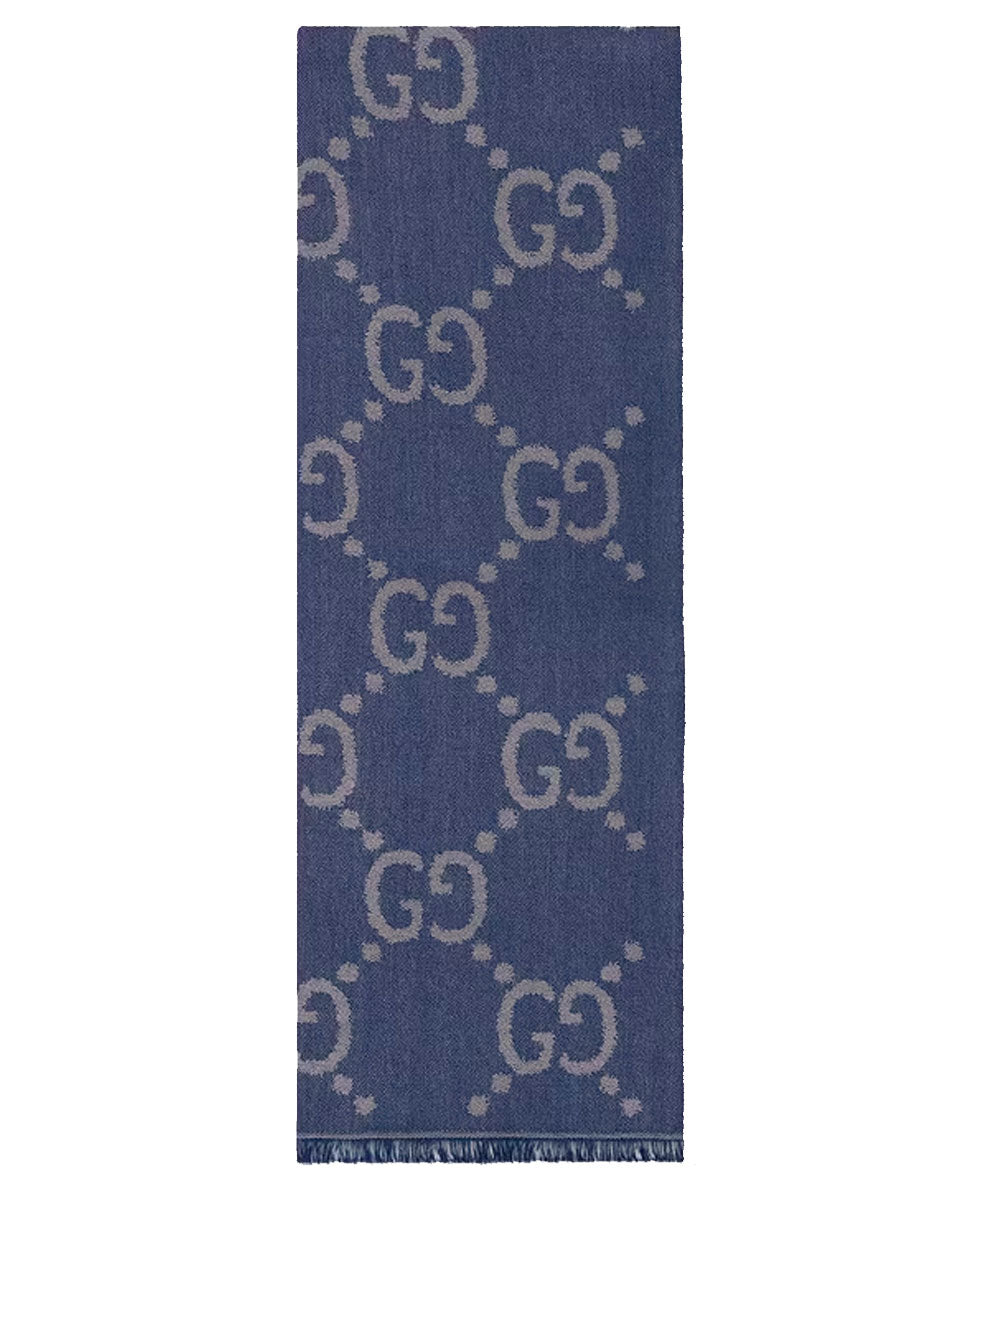 GG cotton silk shawl